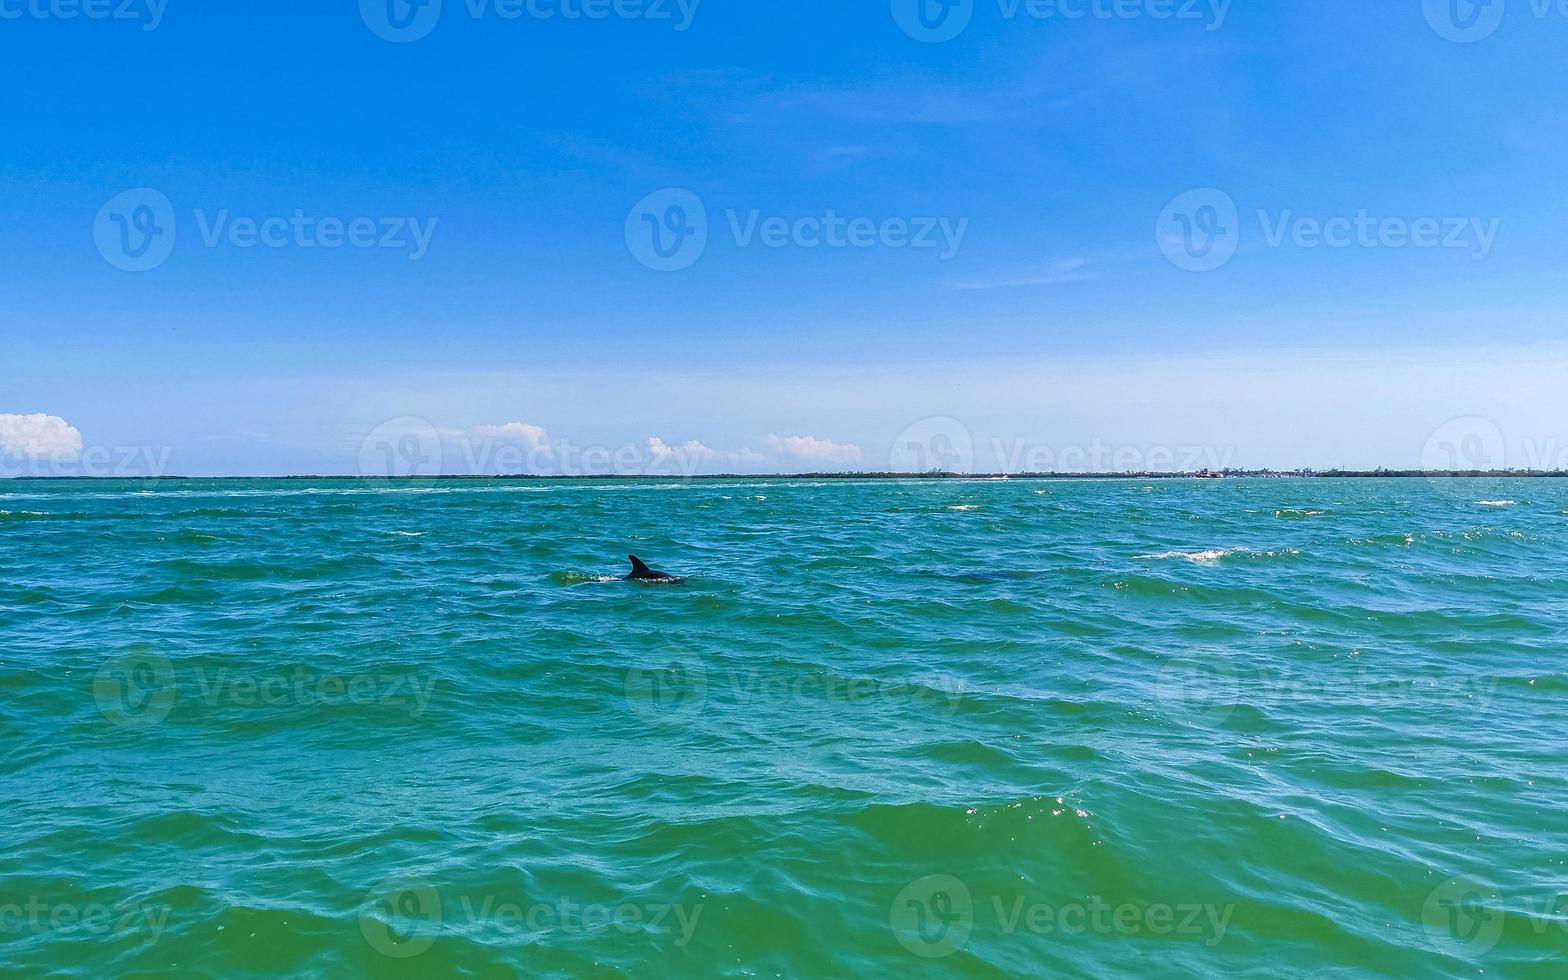 dolfijnen zwemmen in de water uit holbox eiland Mexico. foto